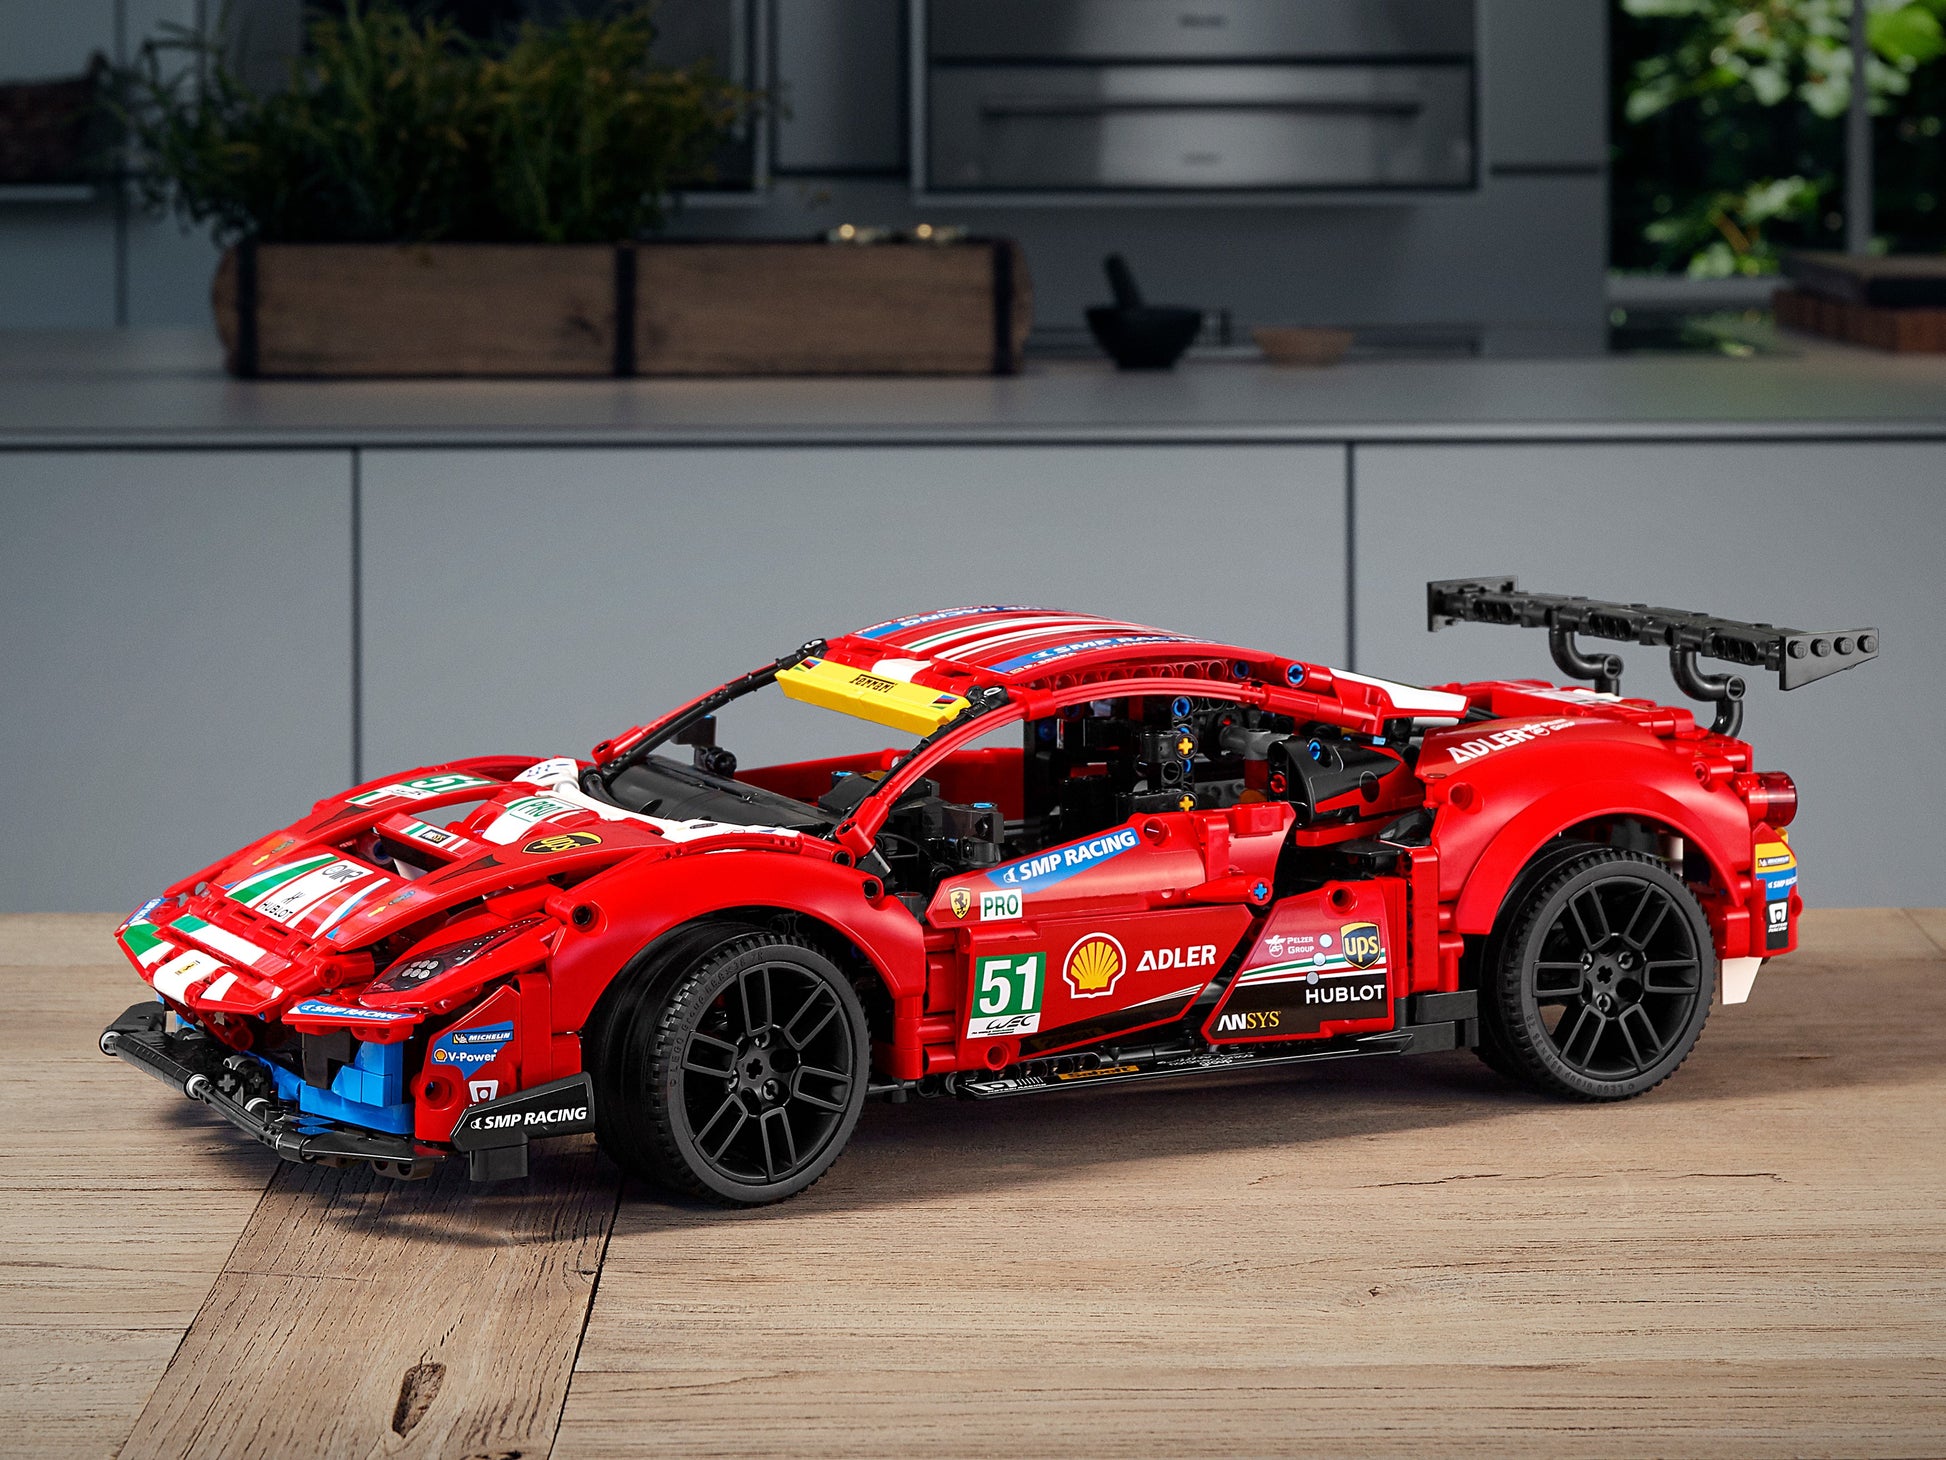 LEGO Technic Ferrari 488 GTE “ Af Corse #51” 42125 Car Race